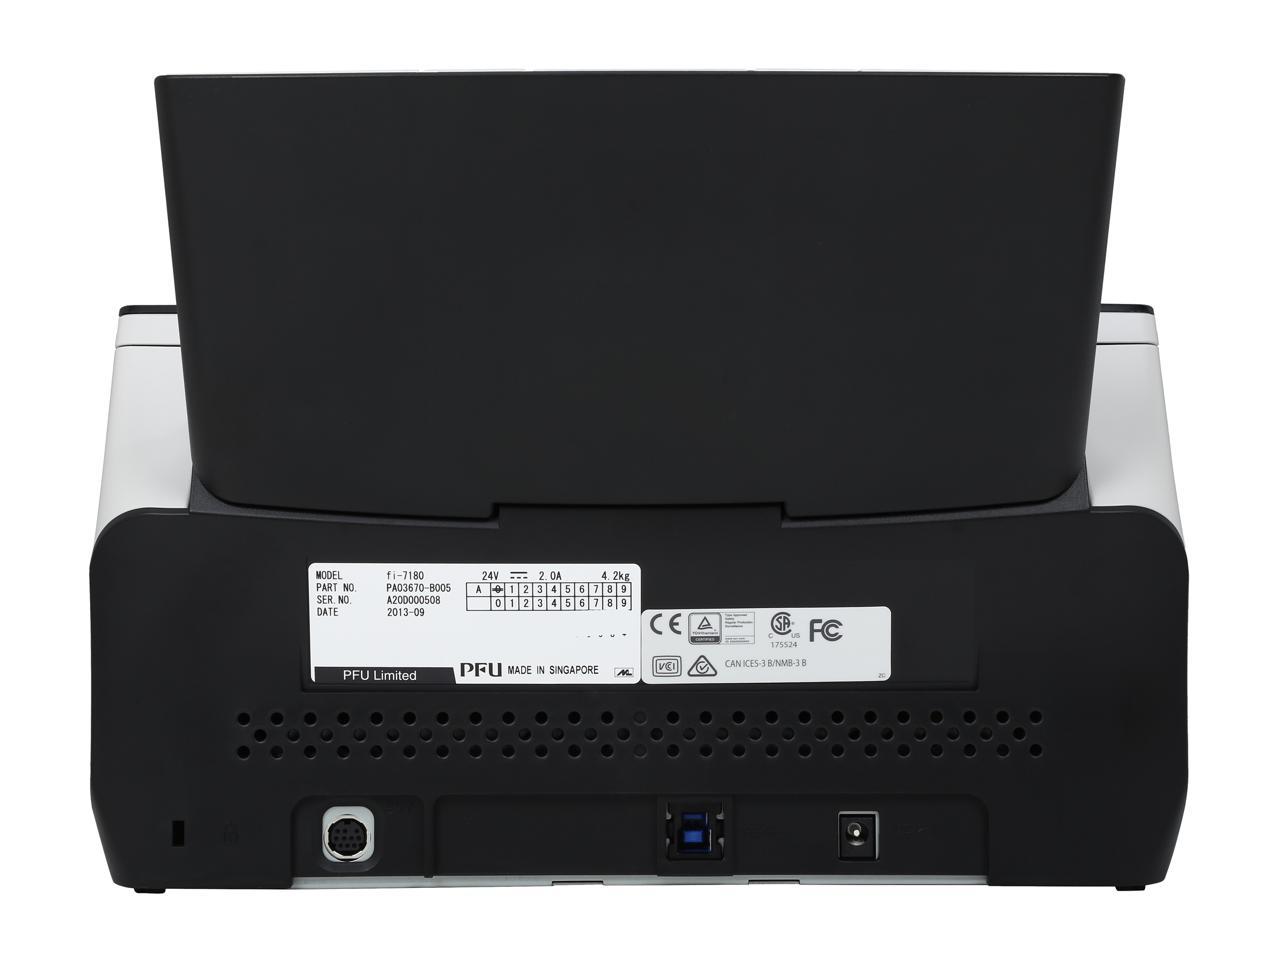 Fujitsu Fi-7180 Document Scanner (PA03670-B005)